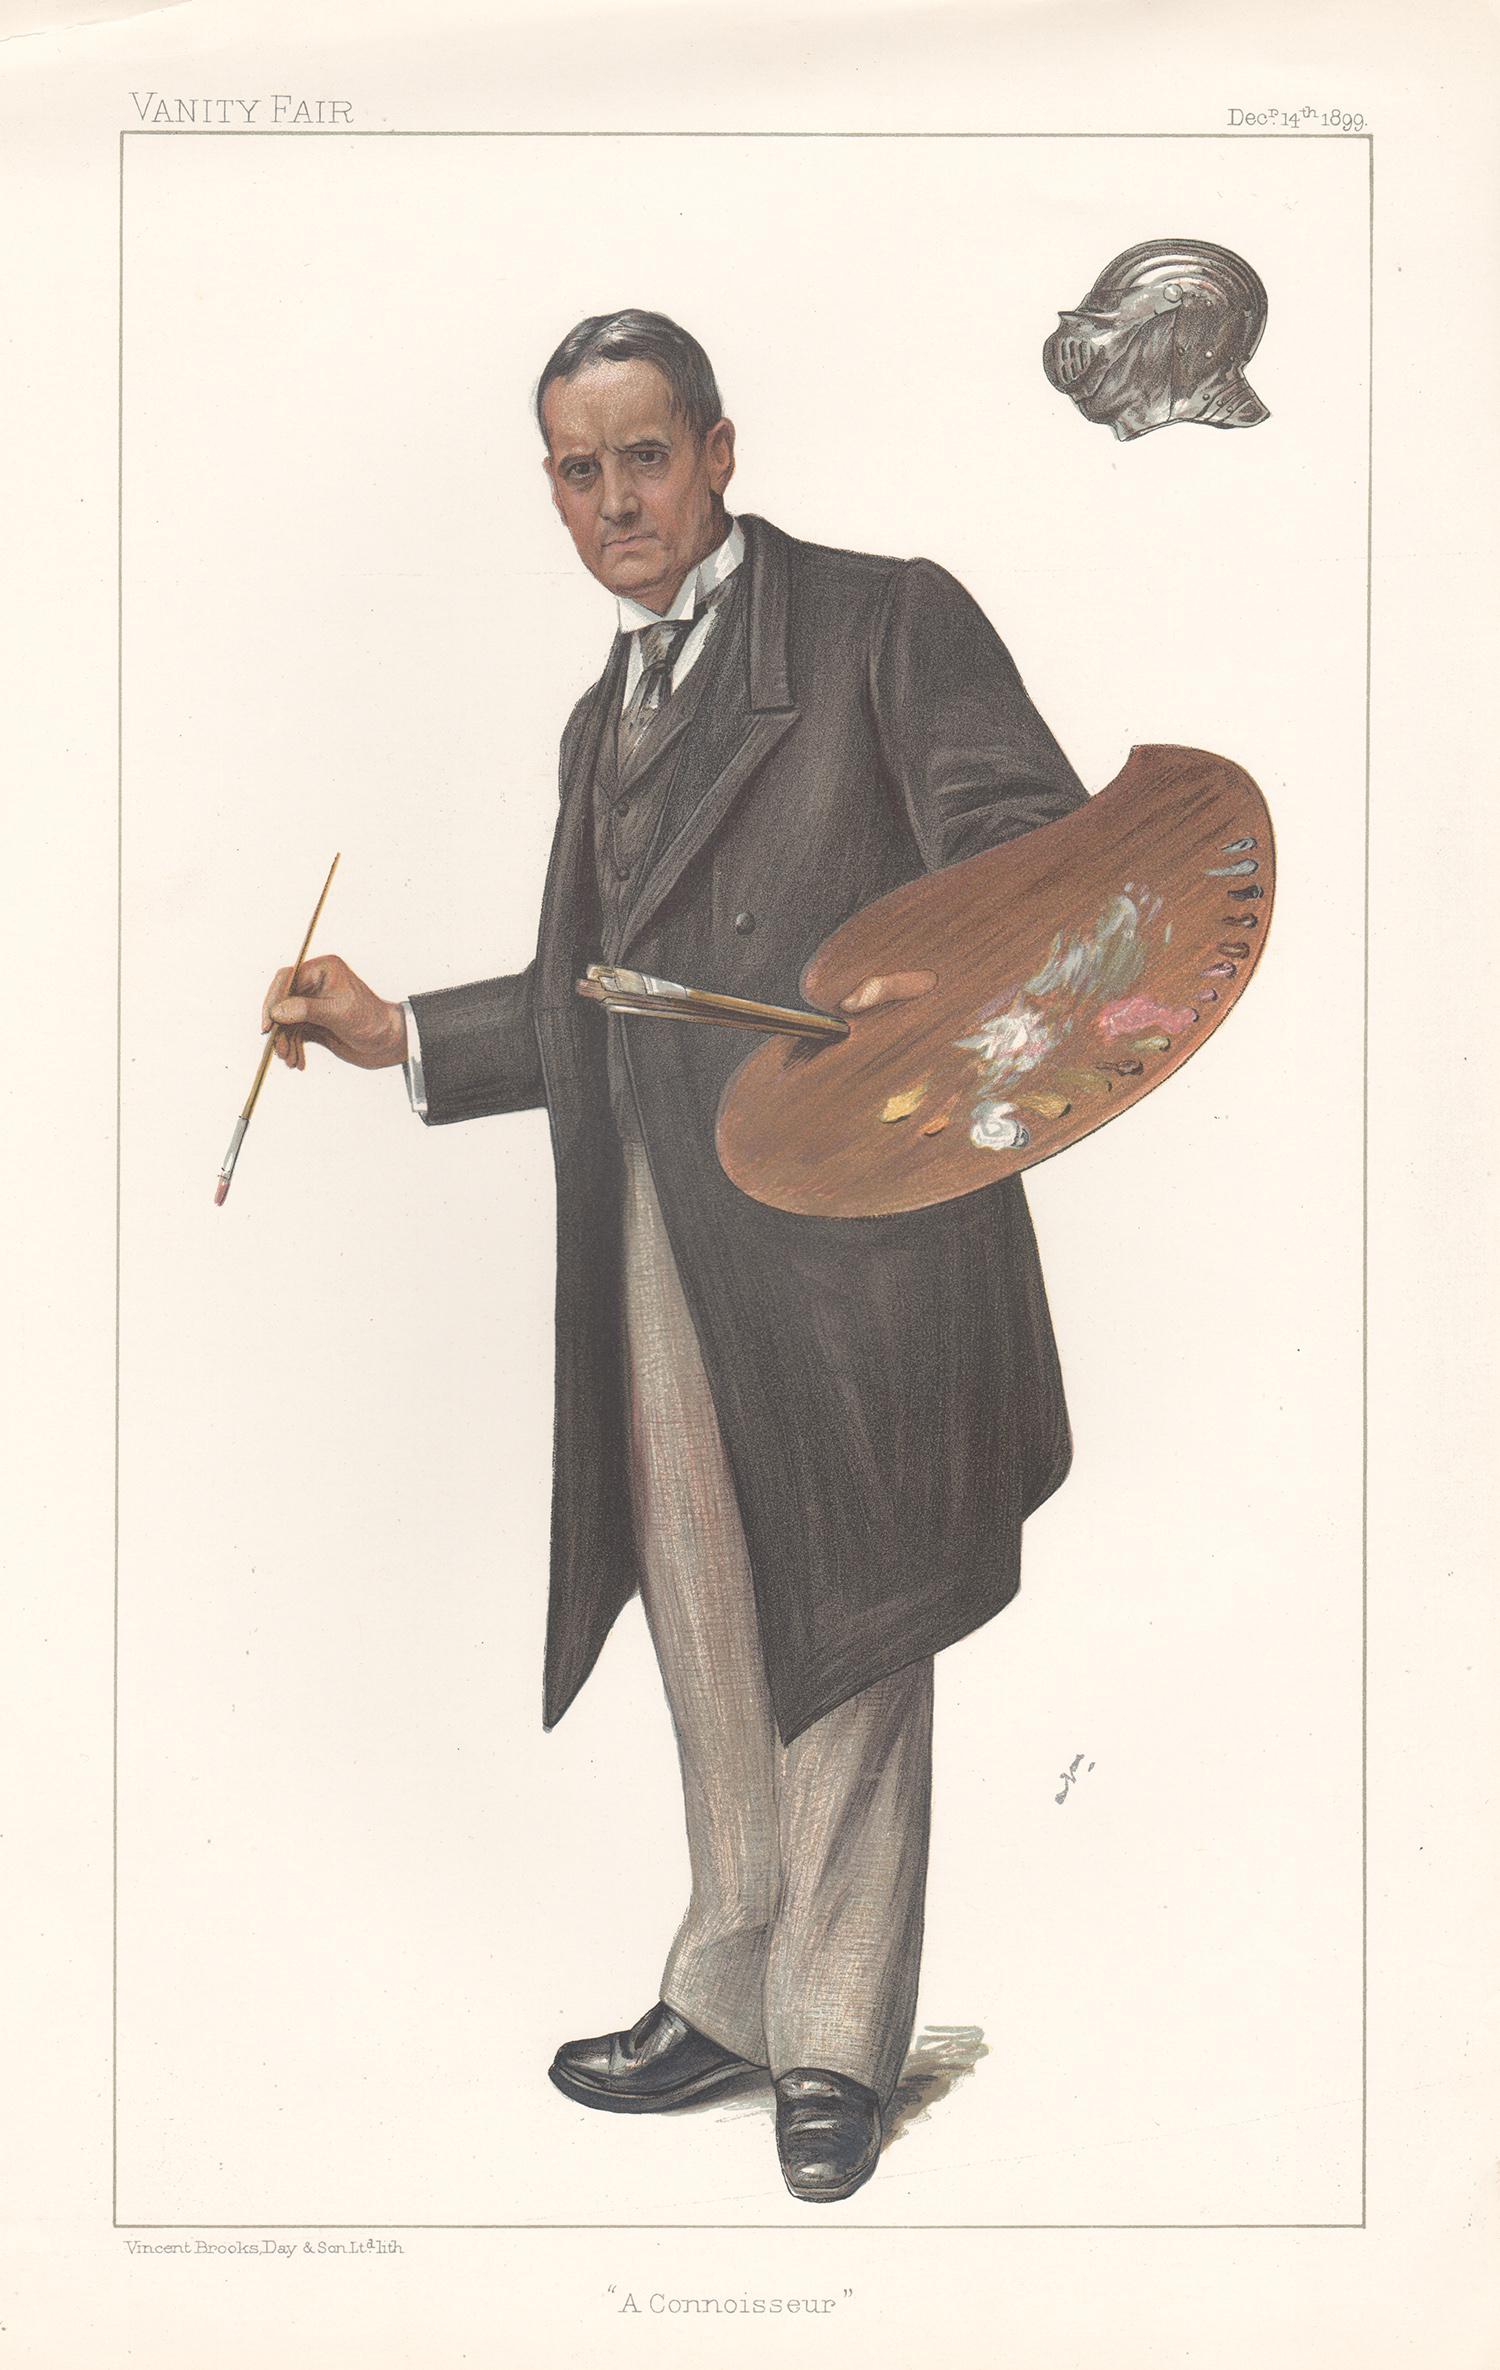 John Seymour Lucas, Vanity Fair artist portrait chromolithograph 1899